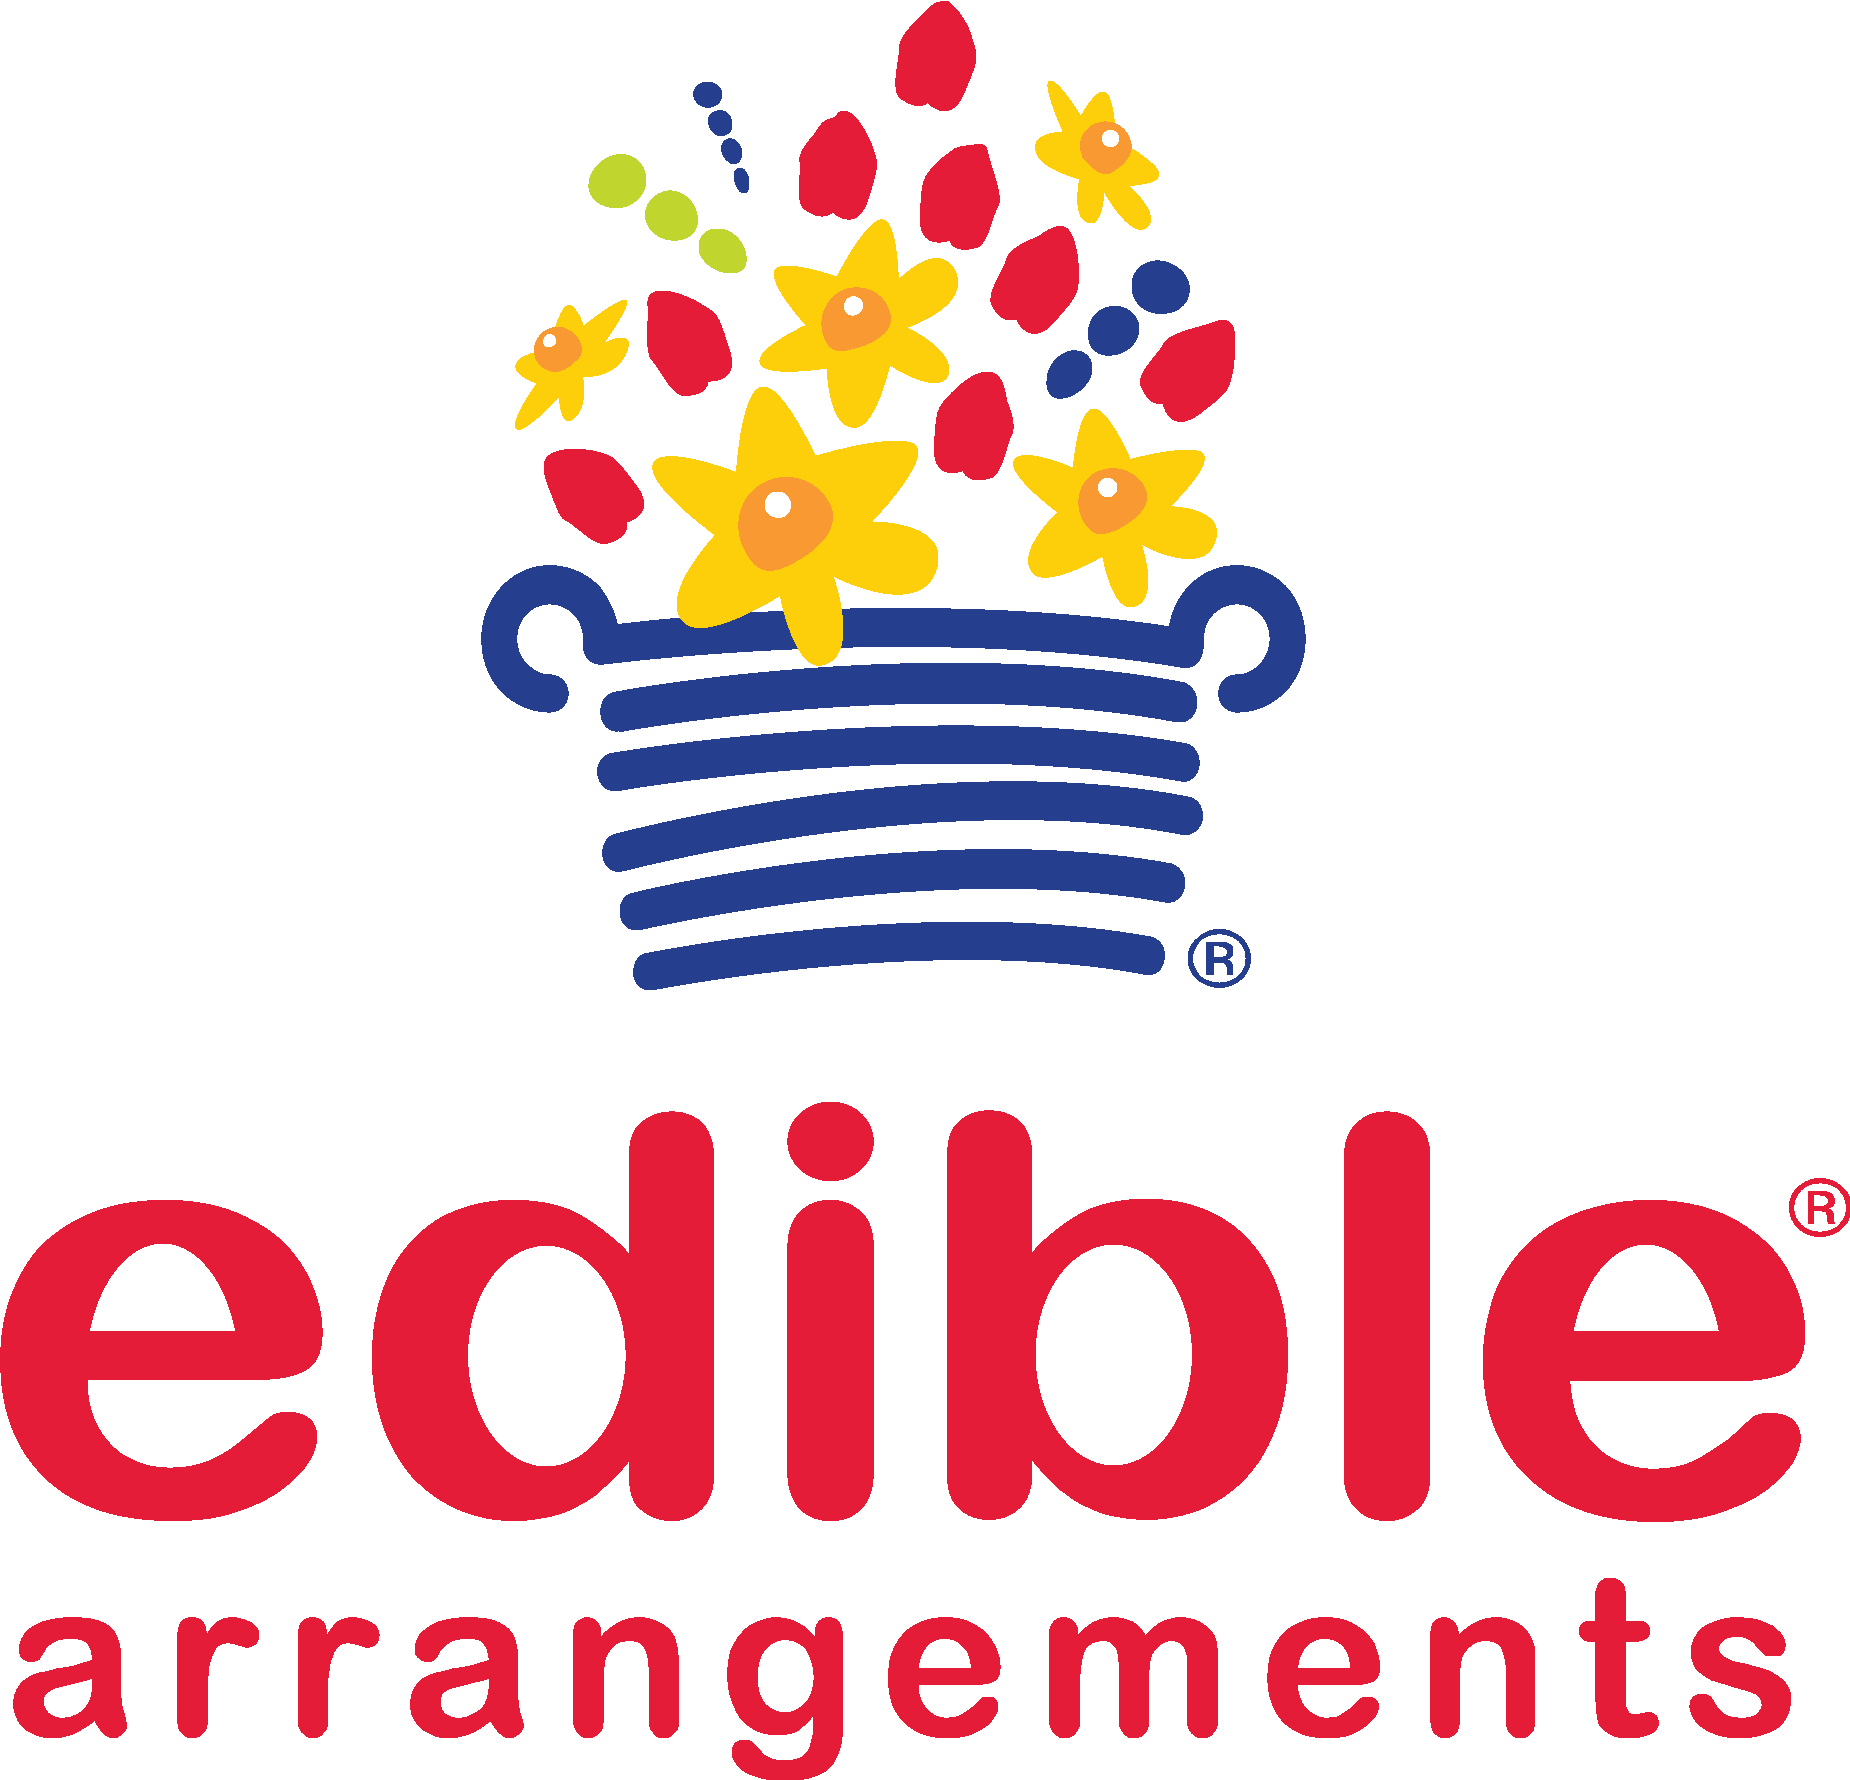 Edible Arrangements original Logo Vector